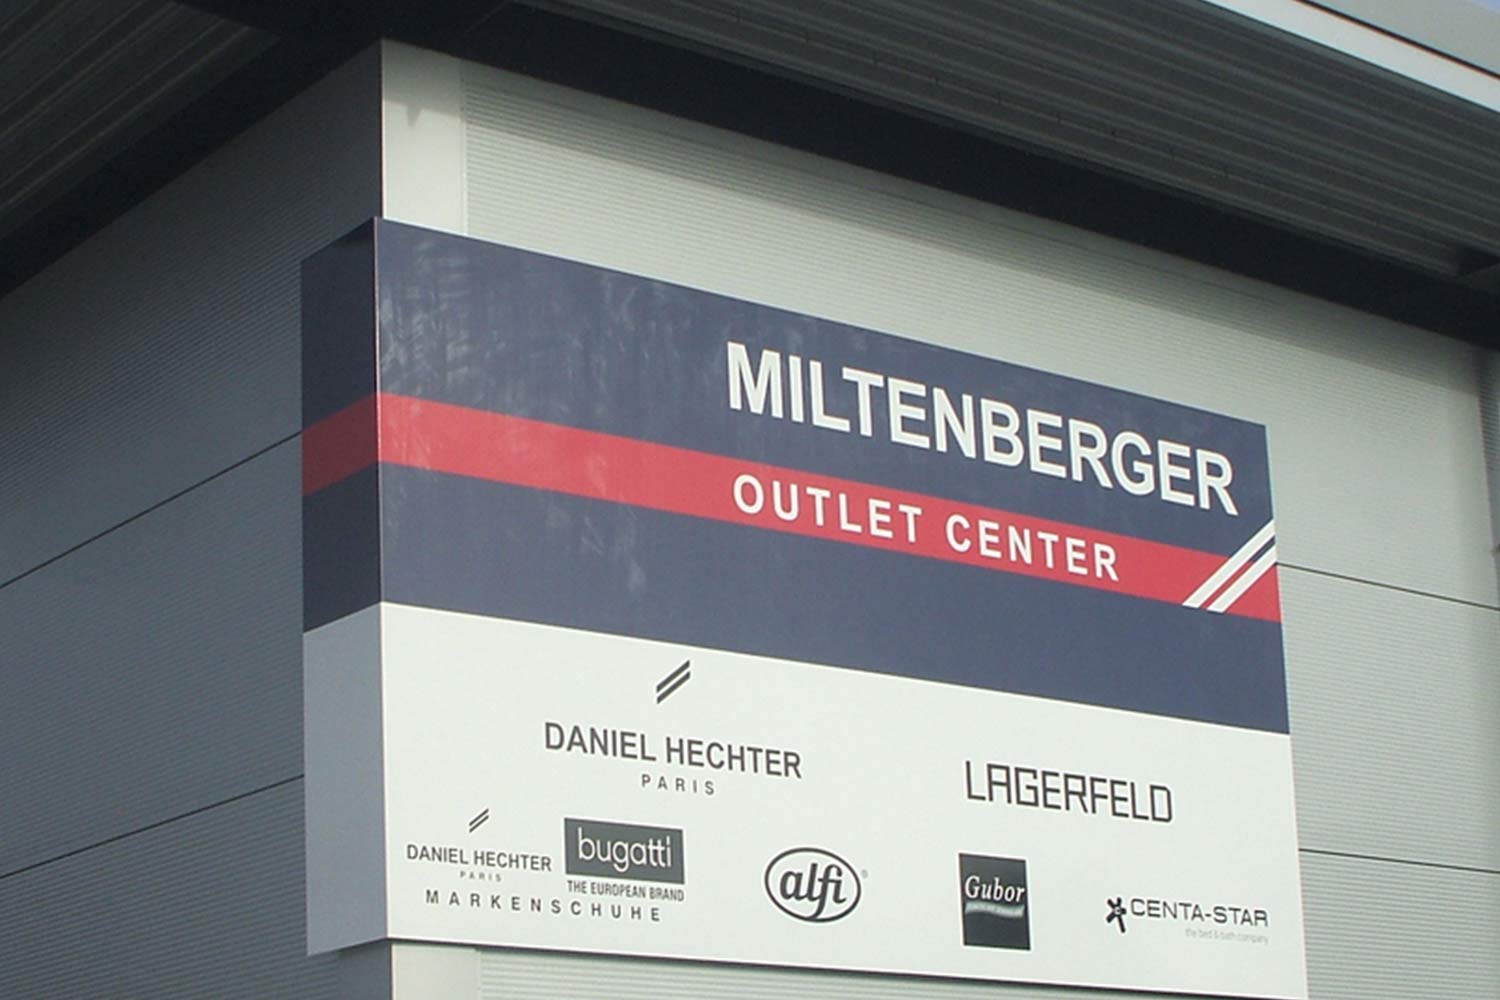 Outlet Center Miltenberg